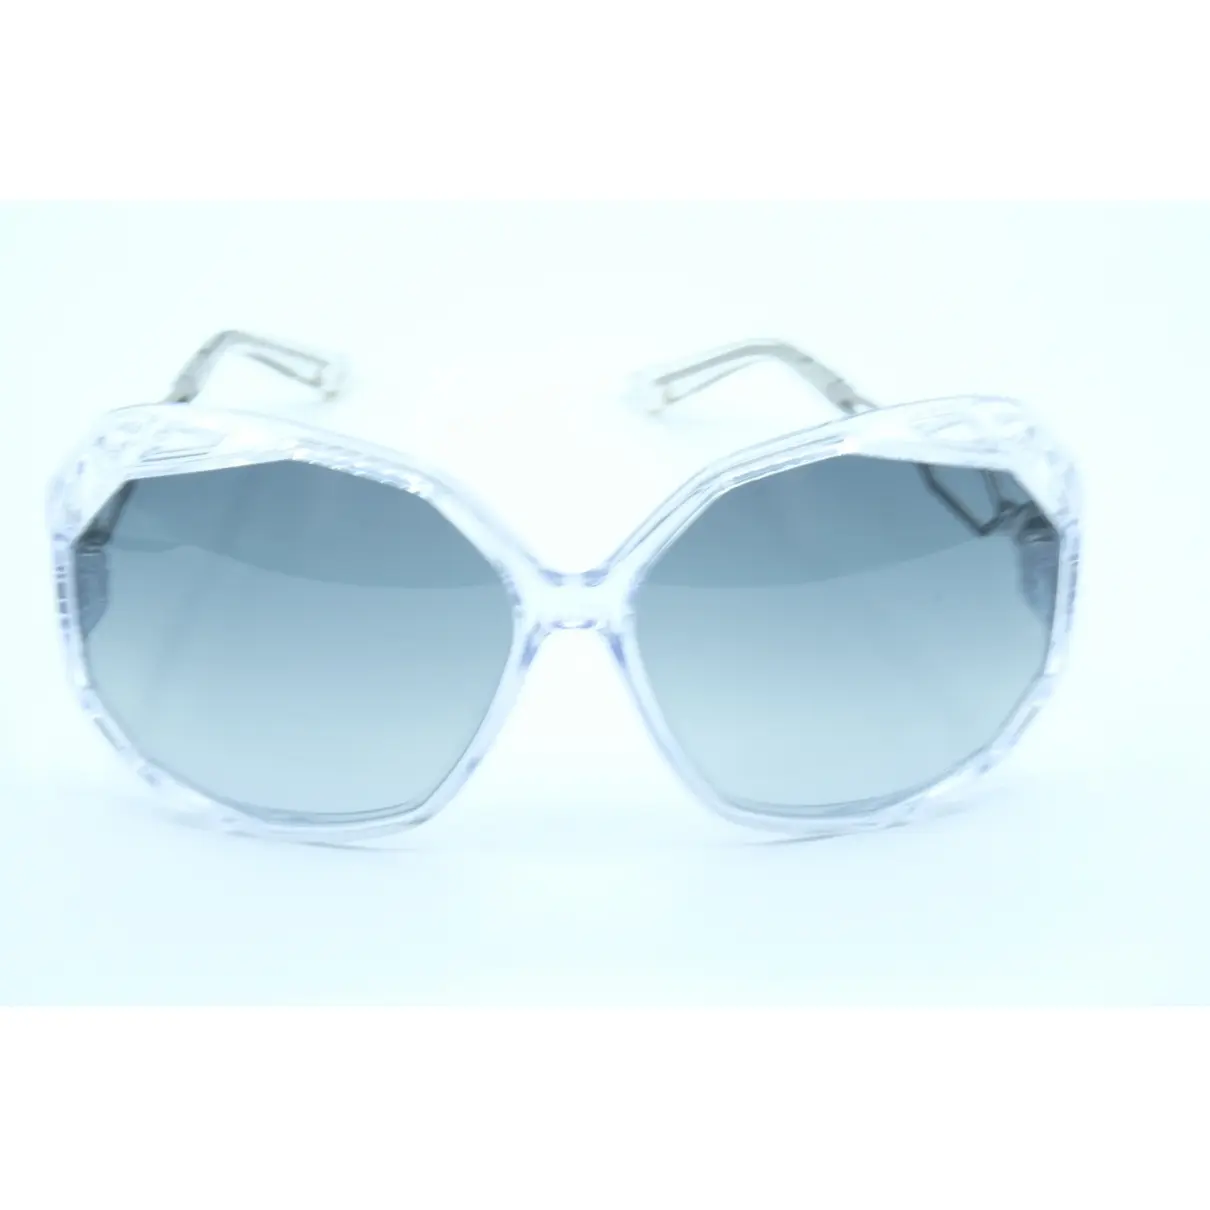 Buy Swarovski Sunglasses online